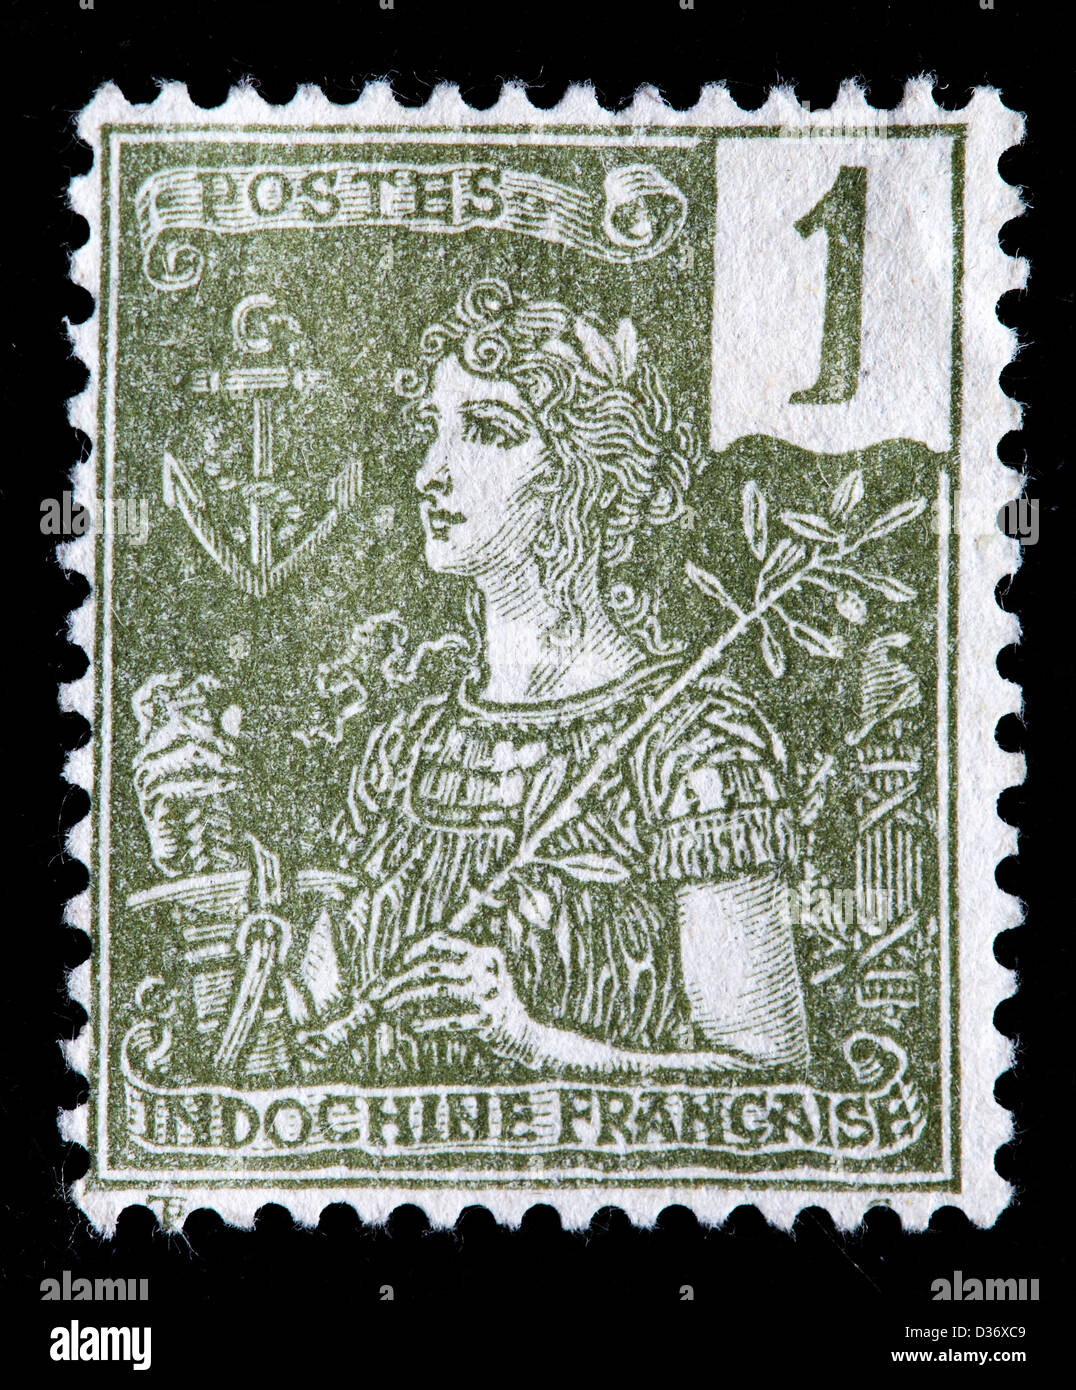 Indochina, postage stamp, 1904 Stock Photo